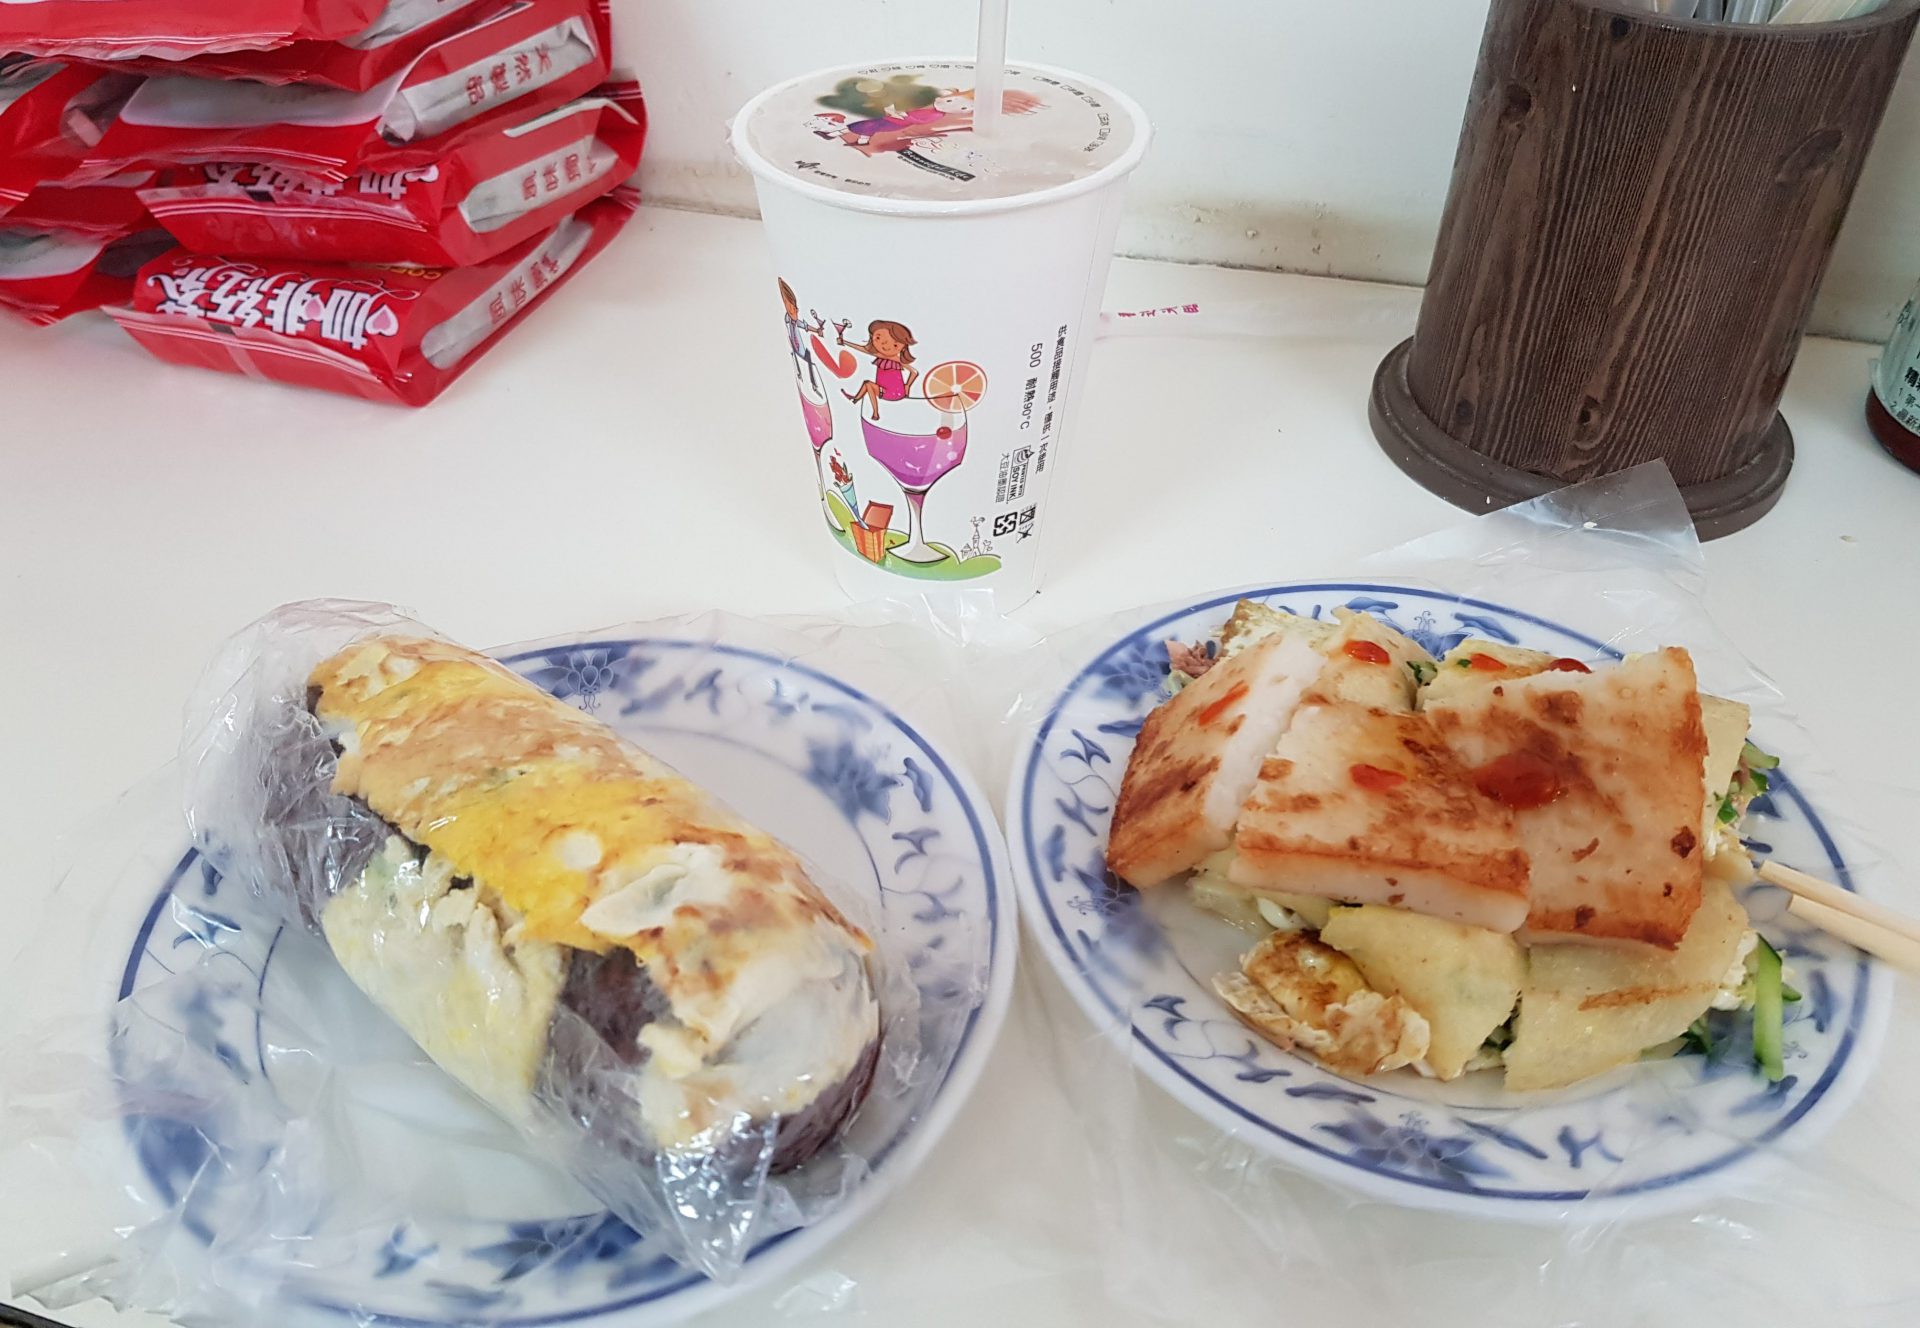 Grandmas Breakfast Restaurant - The Cheapest in Taipei? - Taipei Travel Geek